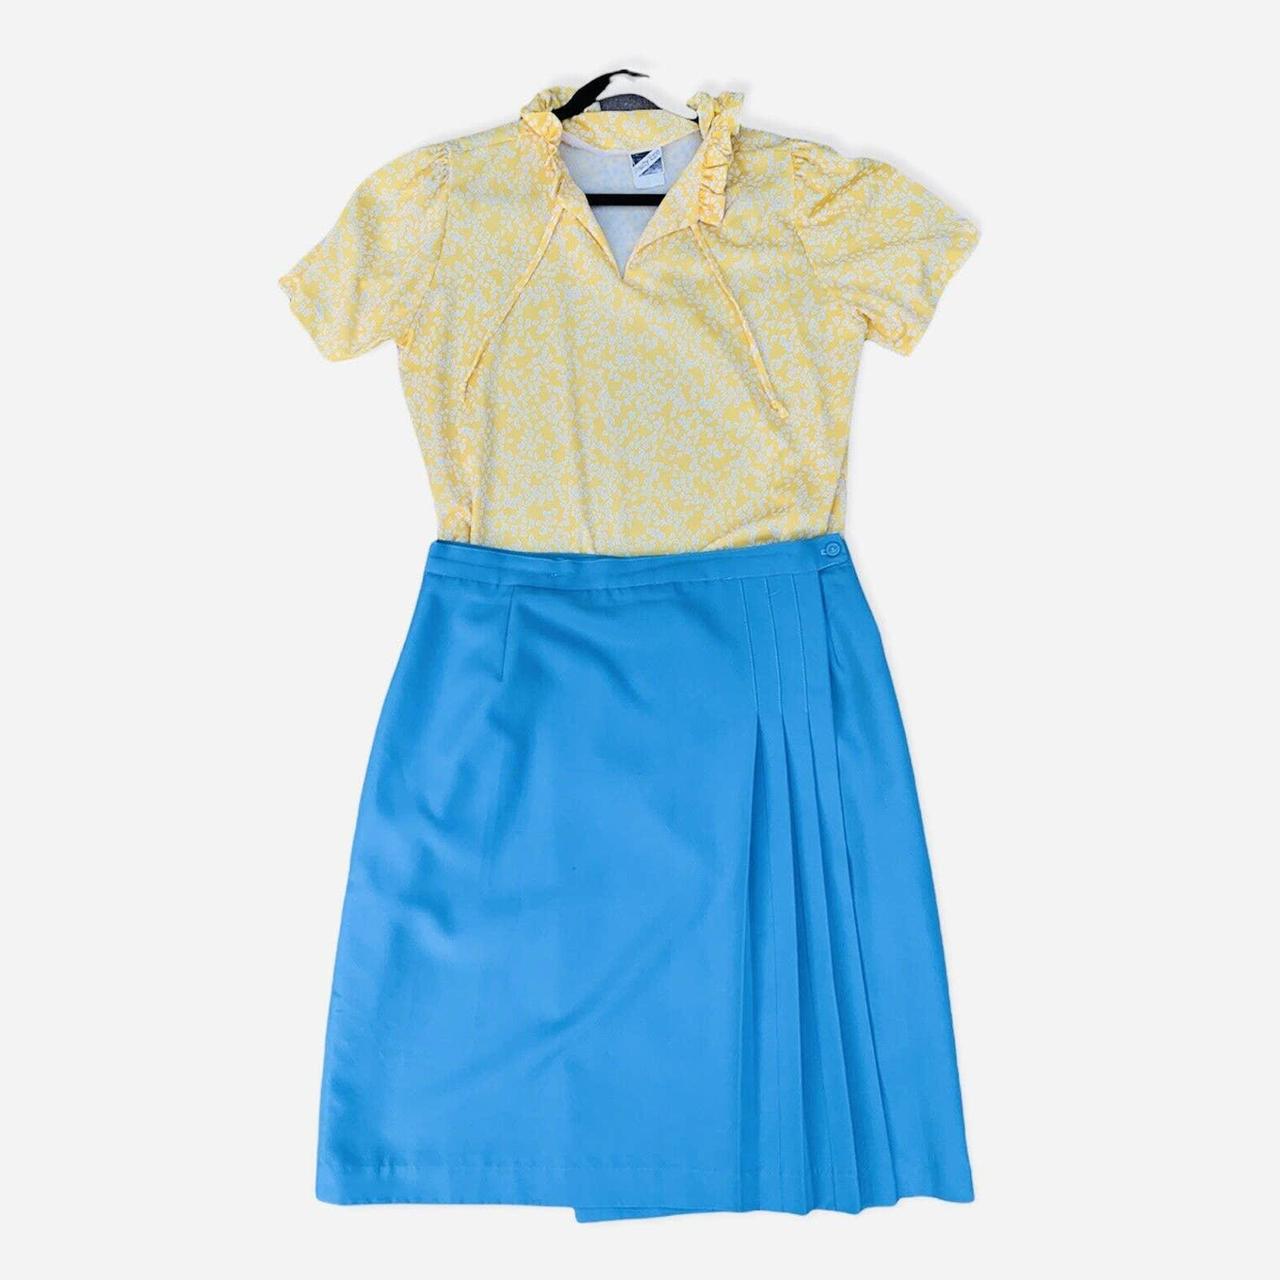 Product Image 1 - Blue Pleated Skirt

Knee Length- below